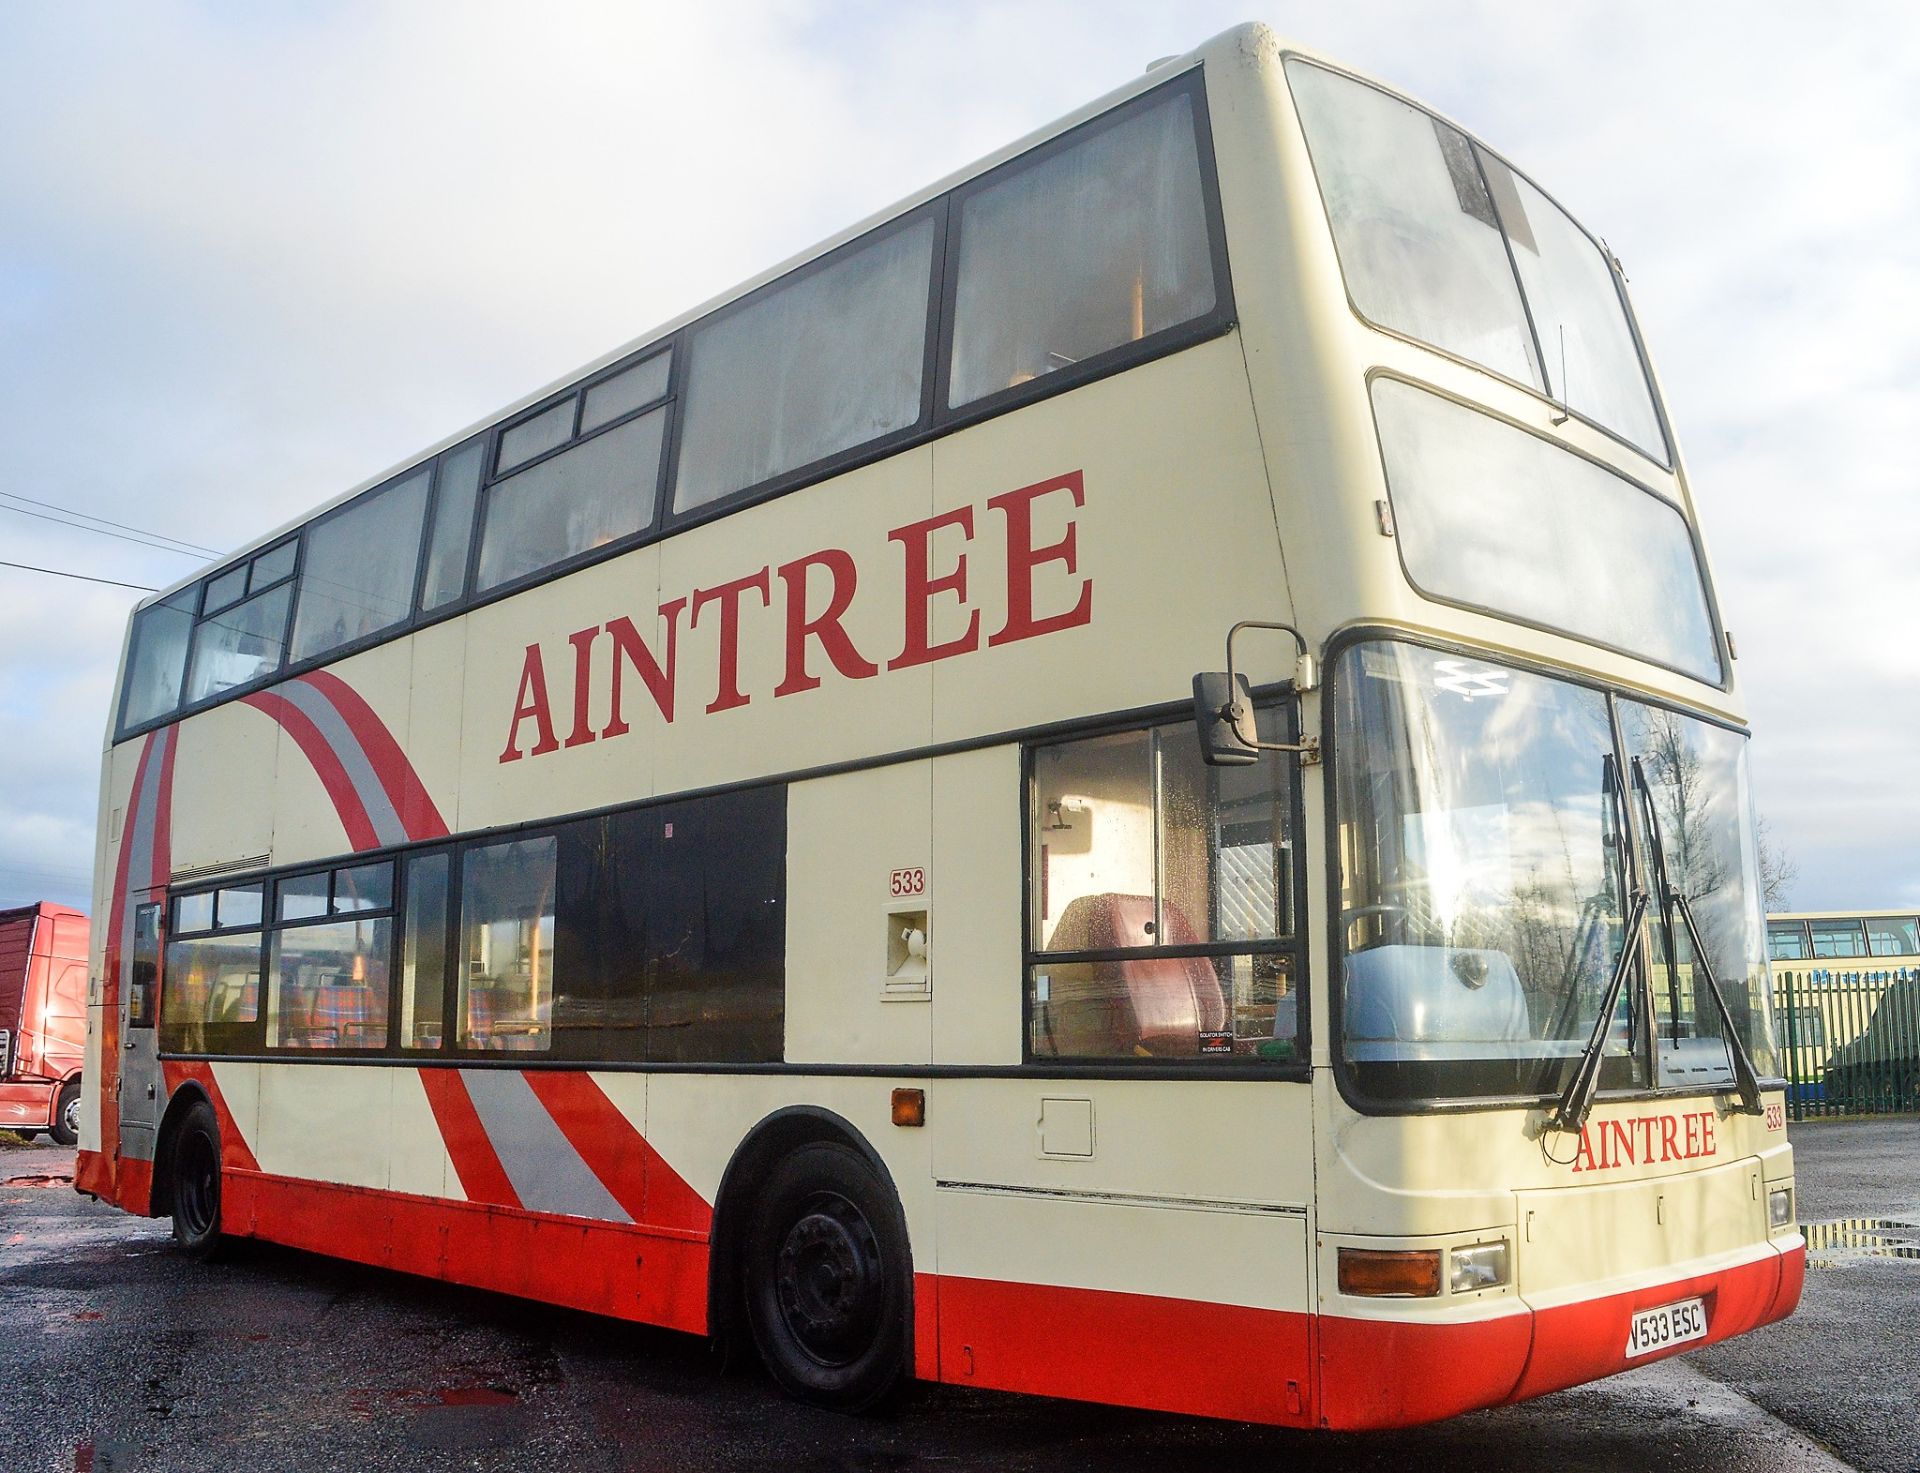 Alexander Dennis Trident Plaxton President 75 seat double deck service bus Registration Number: V533 - Image 2 of 11